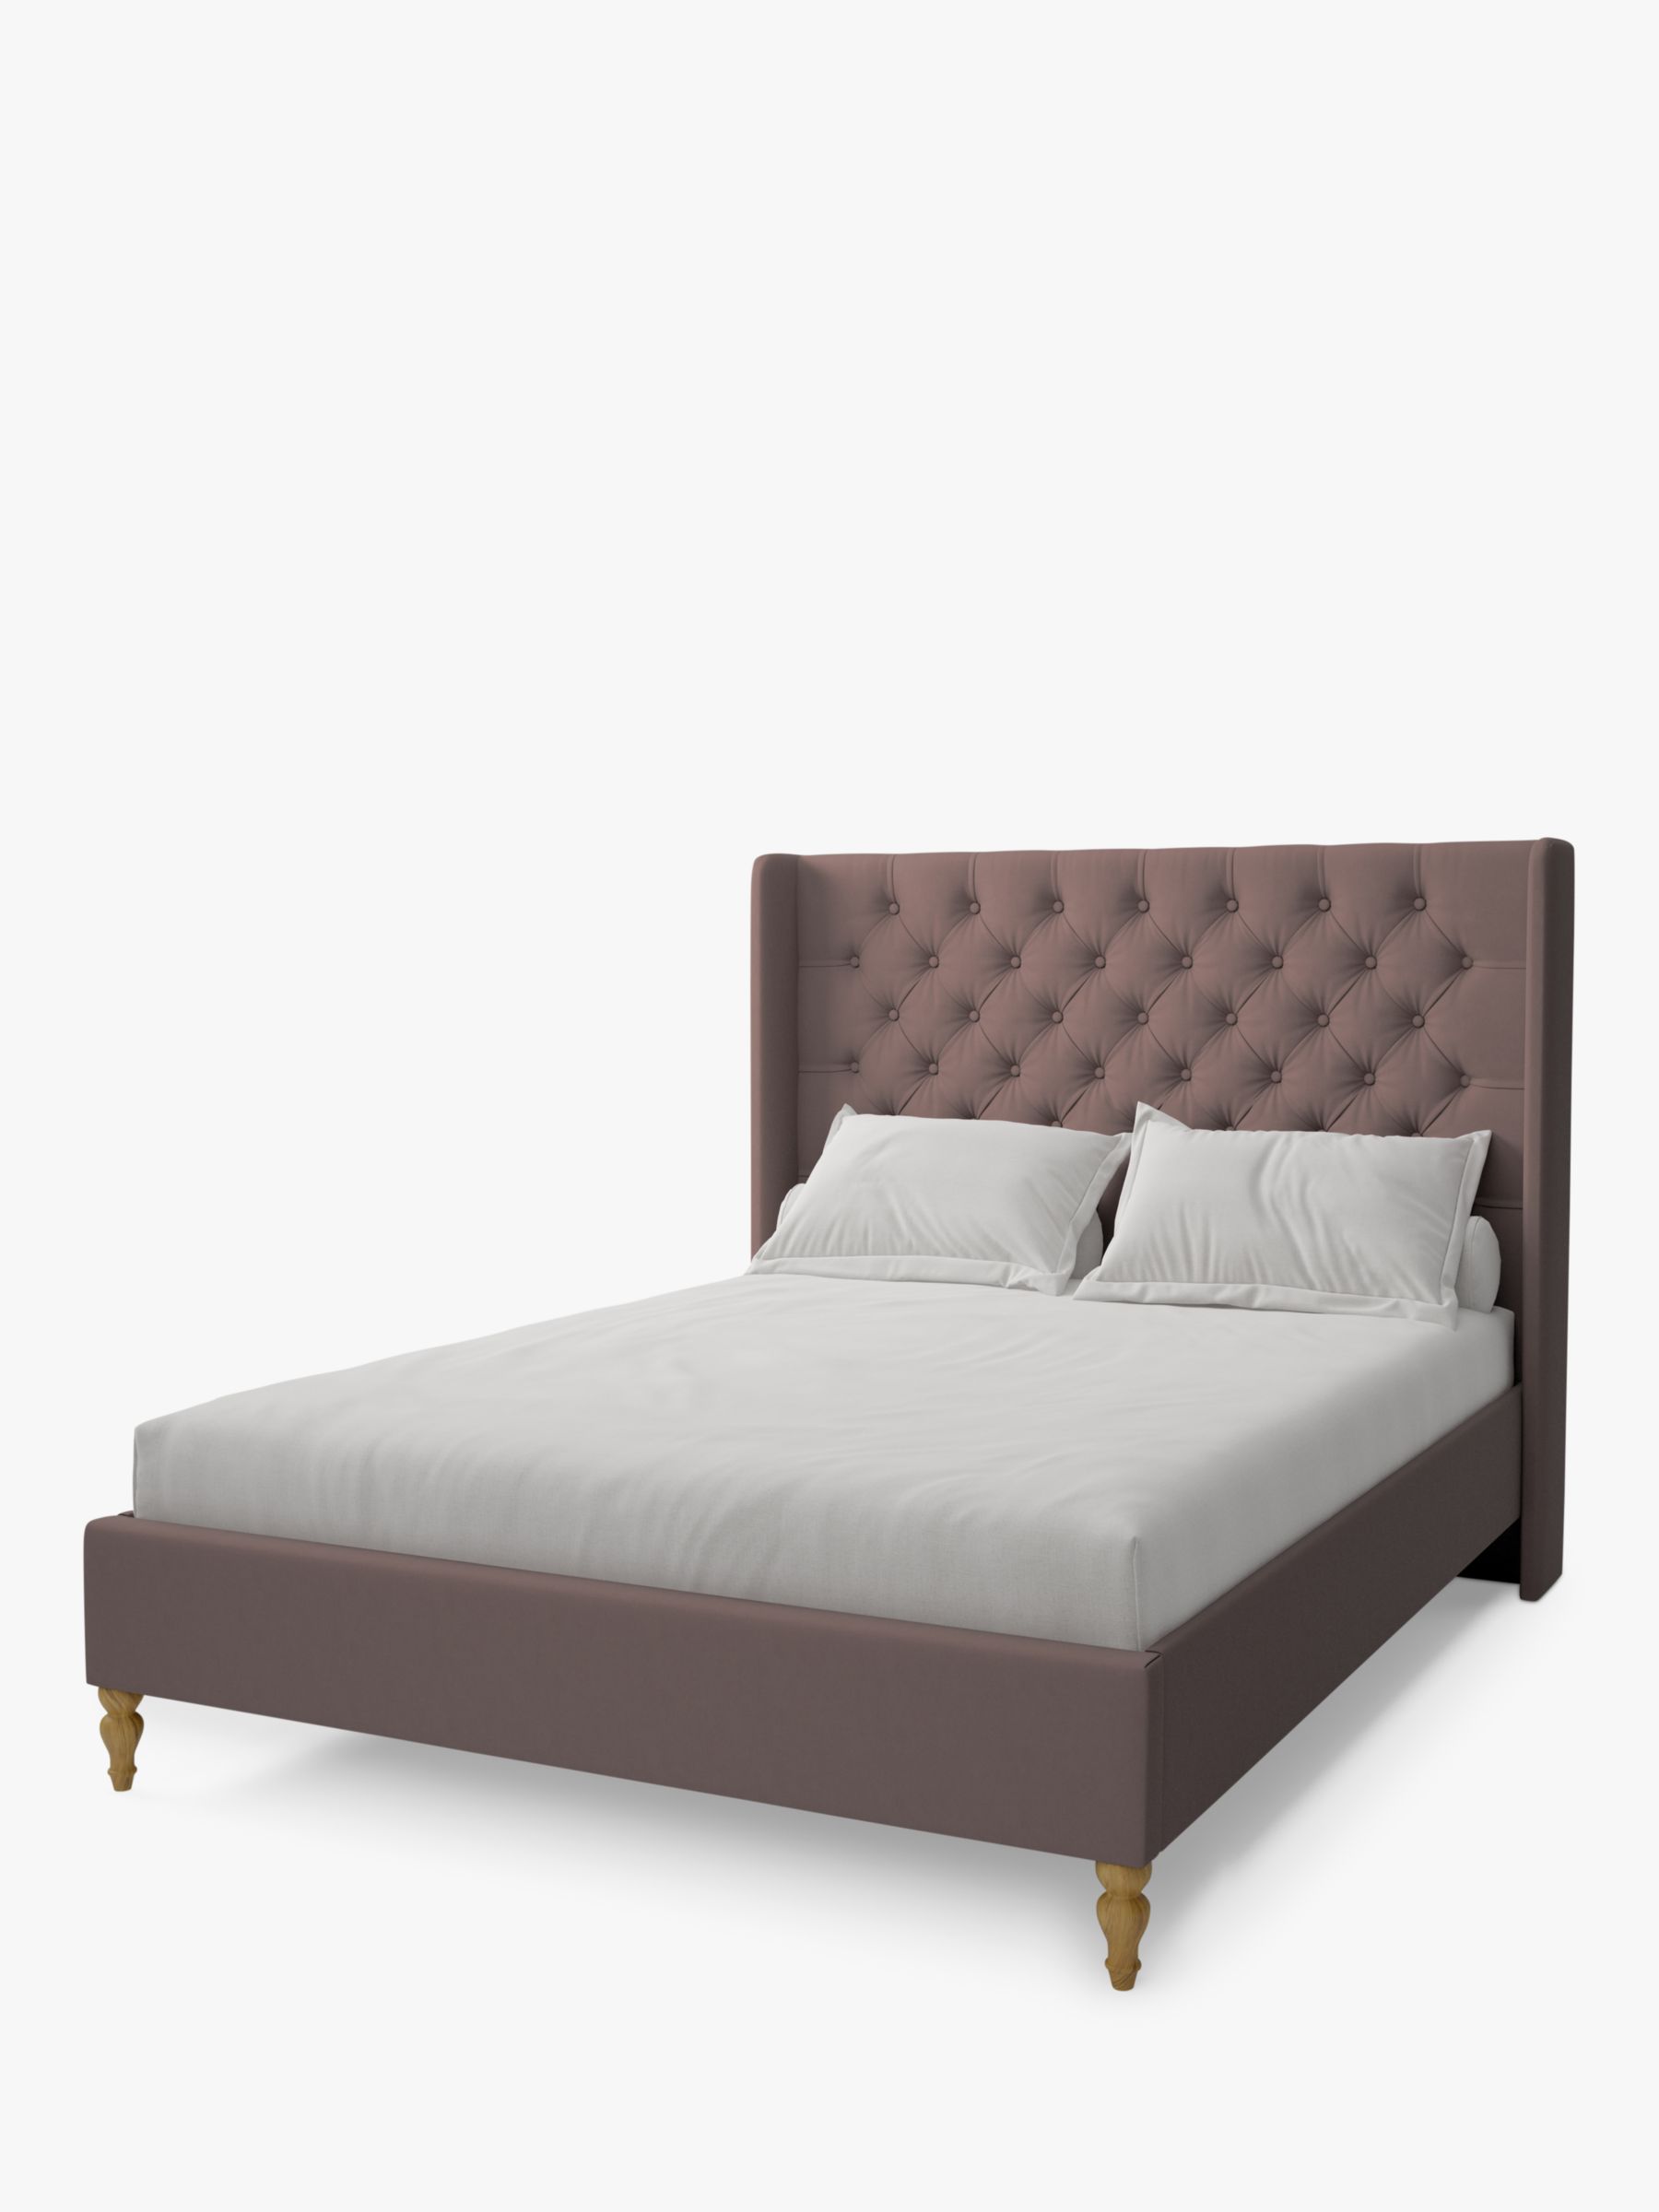 Koti Home Winged On Upholstered Bed, King Size Upholstered Bed Frame